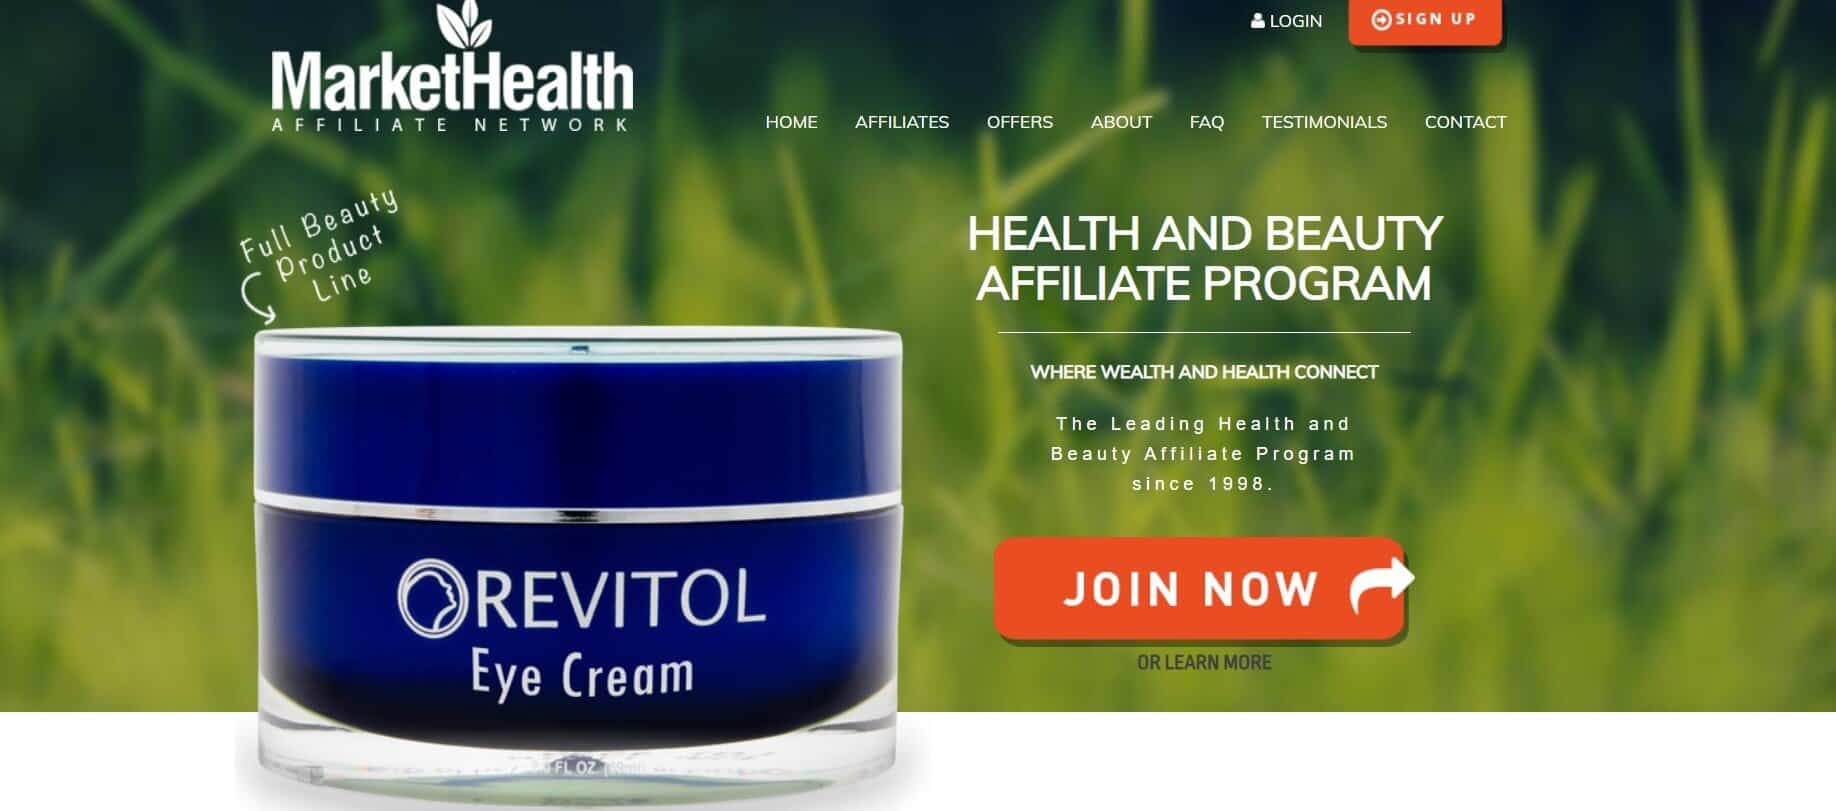 market health affiliate marketing network